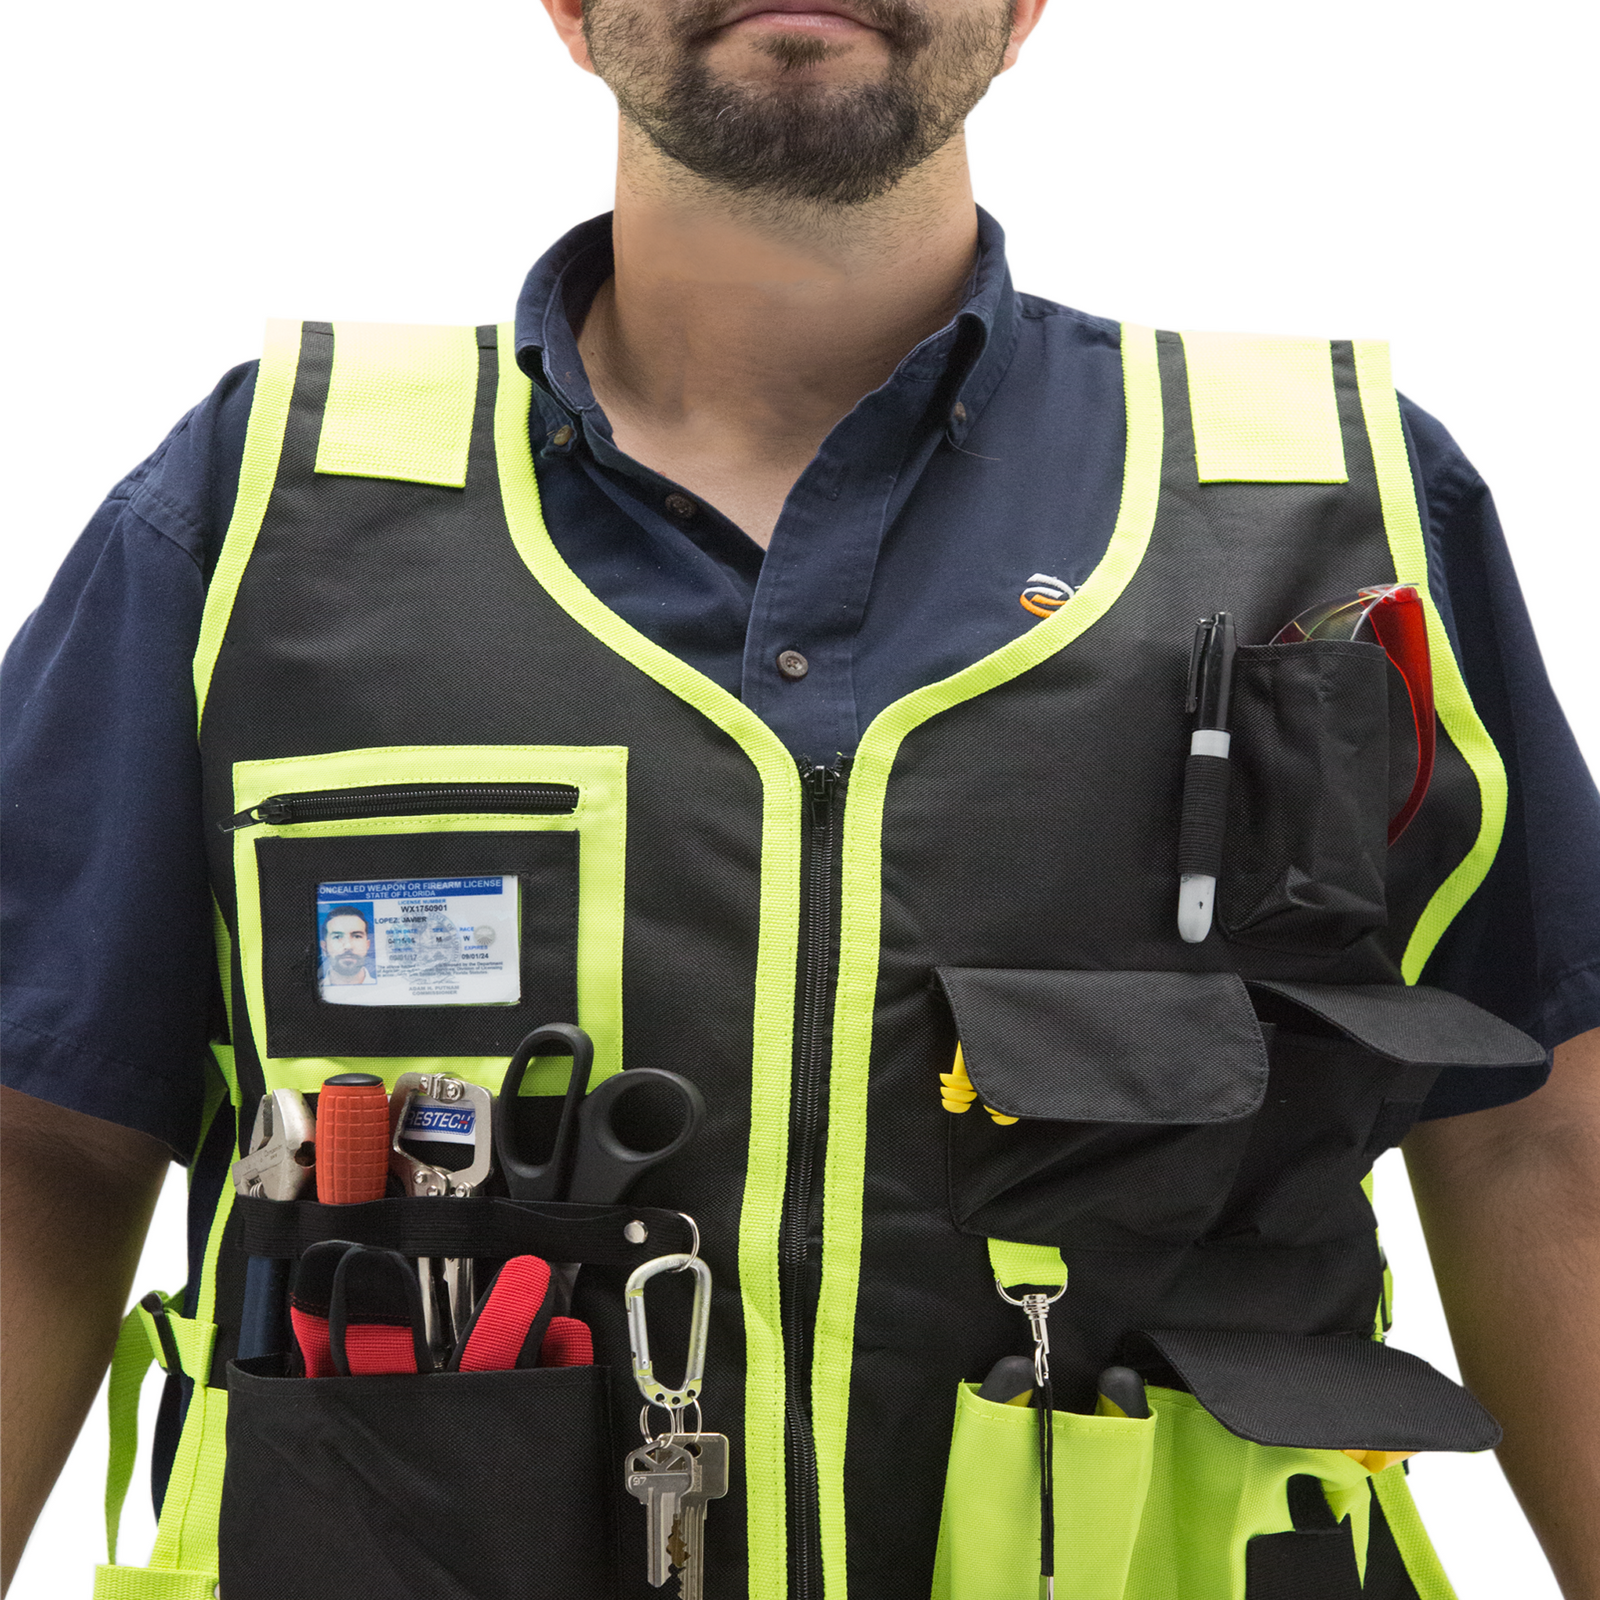 Worker wearing a JORESTECH tool vest filled with items like, keys, screw drivers, pliers, scissors, pens, gloves, glasses, etc.